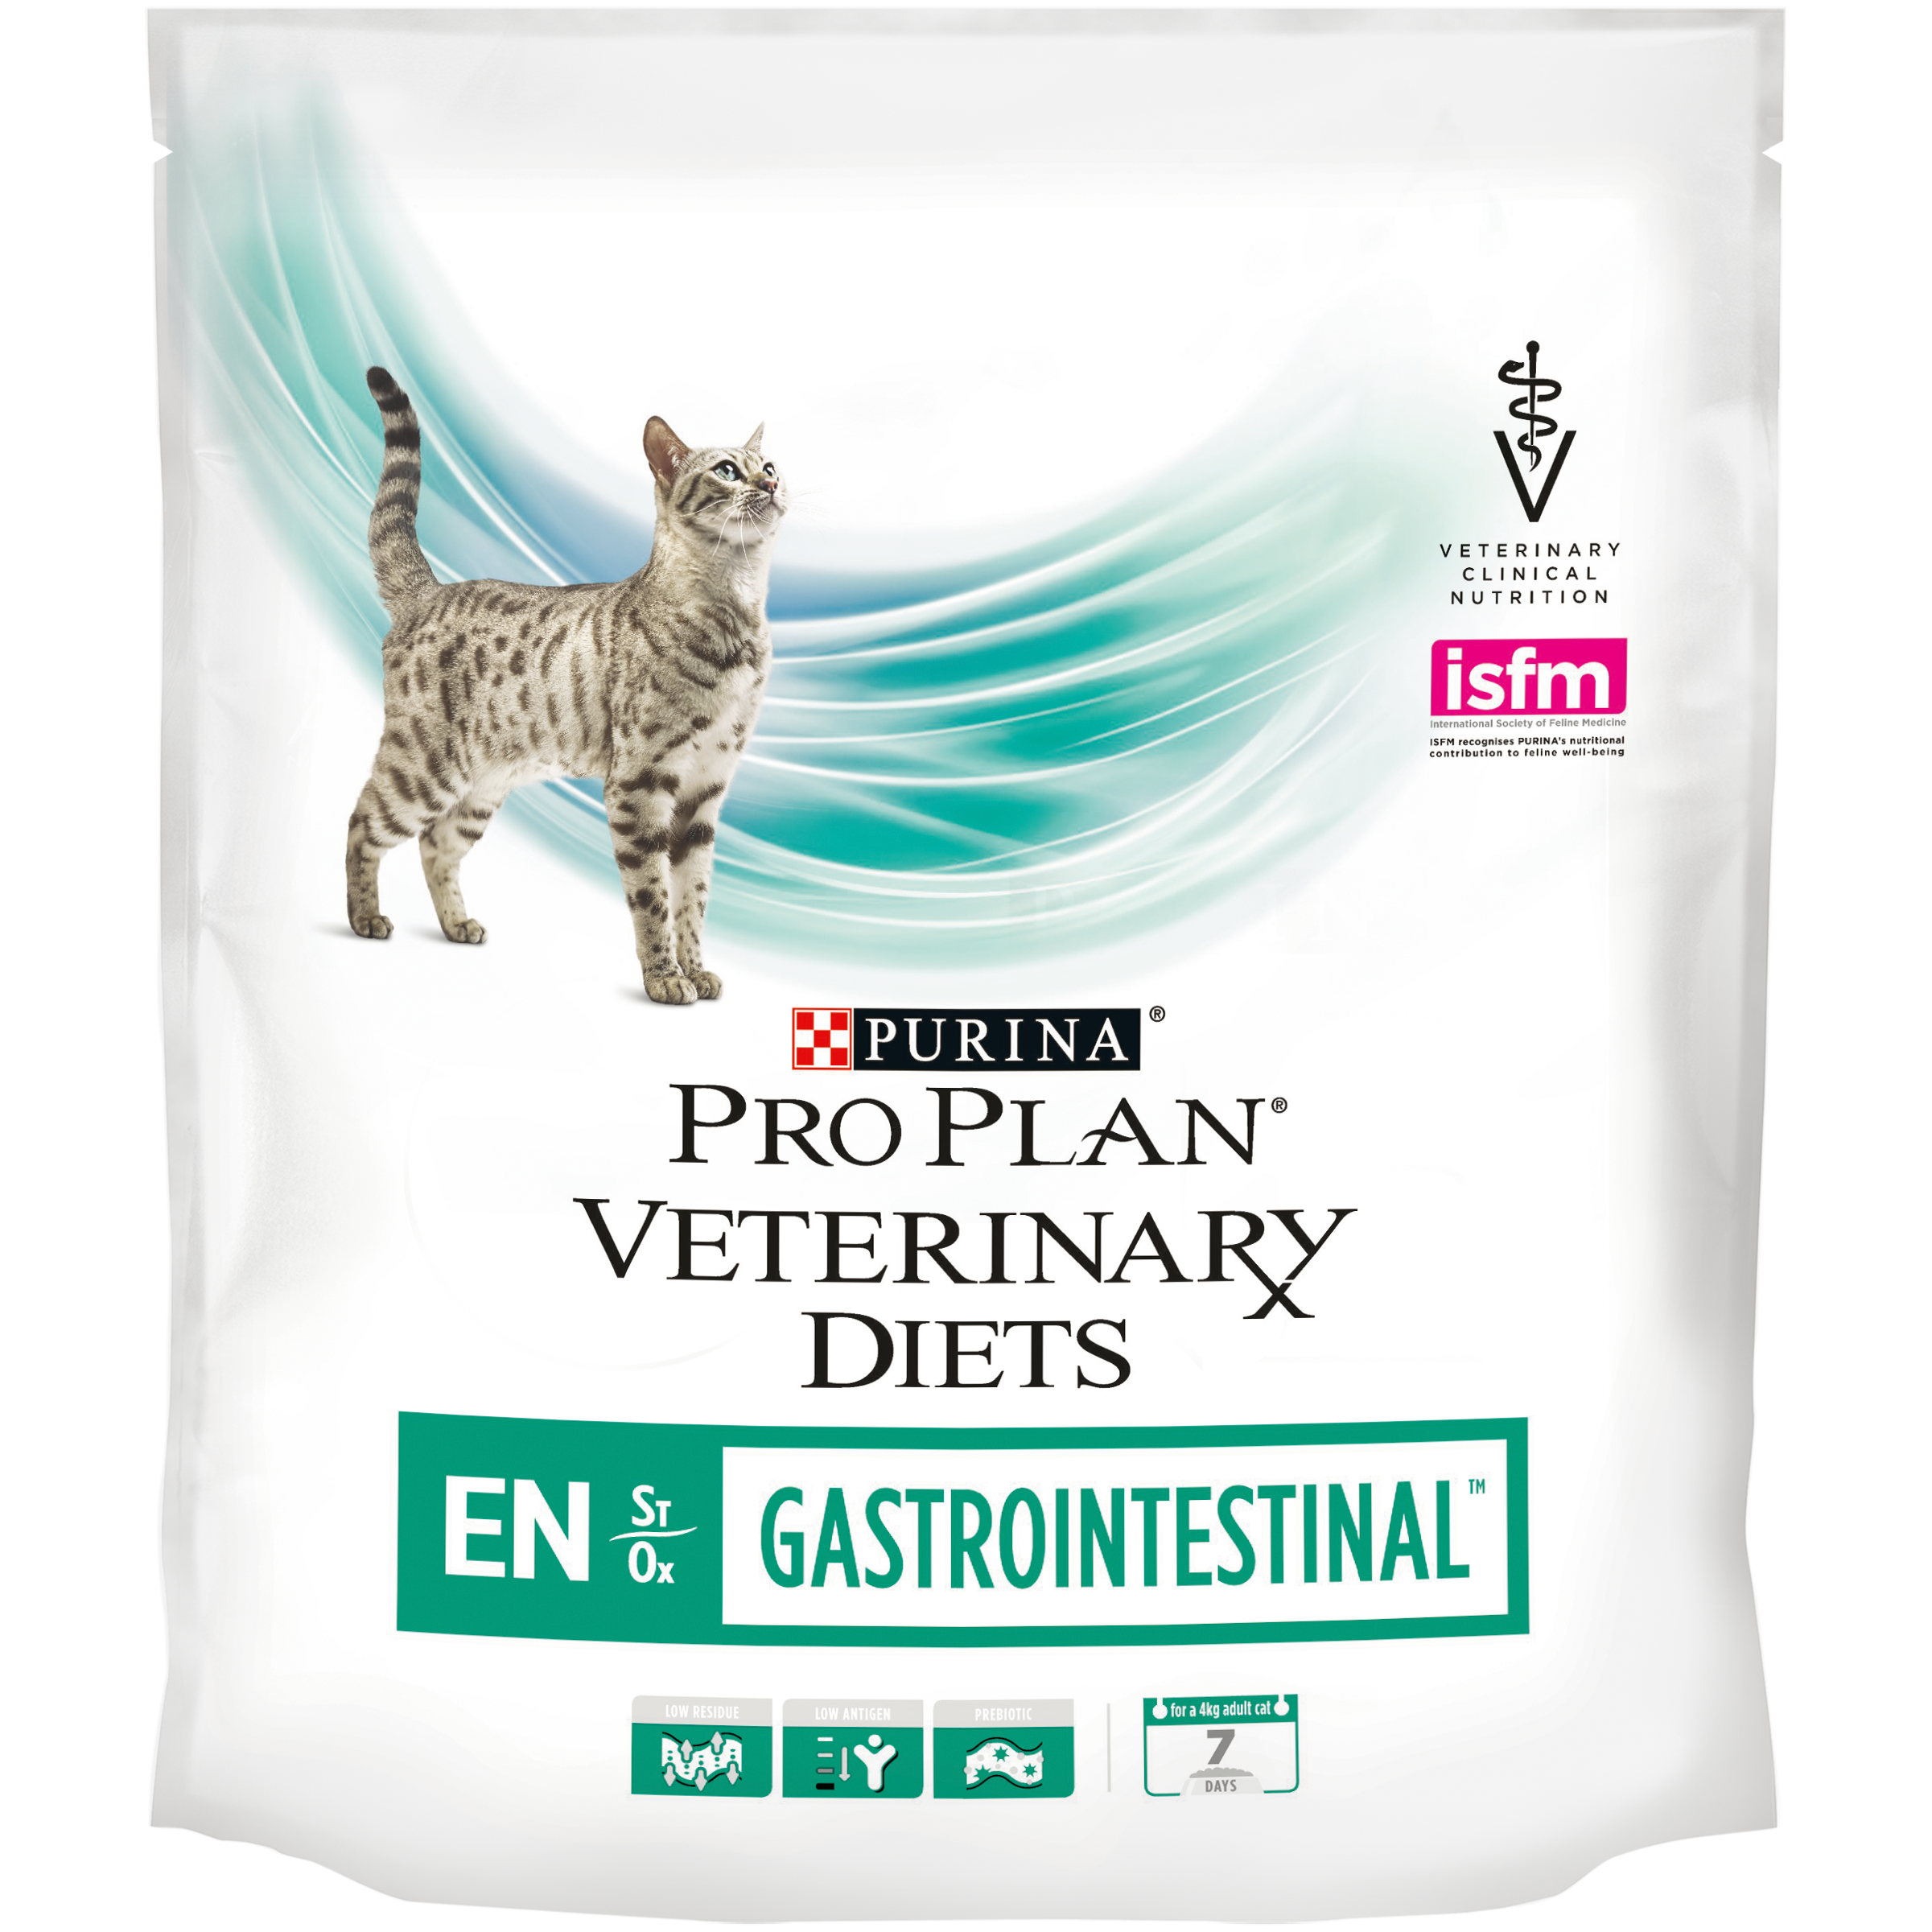 Корм для кошки pro plan nf влажный. Pro Plan Veterinary Diets Hypoallergenic для кошек. Purina Pro Plan Veterinary Diets Gastrointestinal для кошек. Проплан Уринари для кошек сухой. Pro Plan Urinary для кошек.